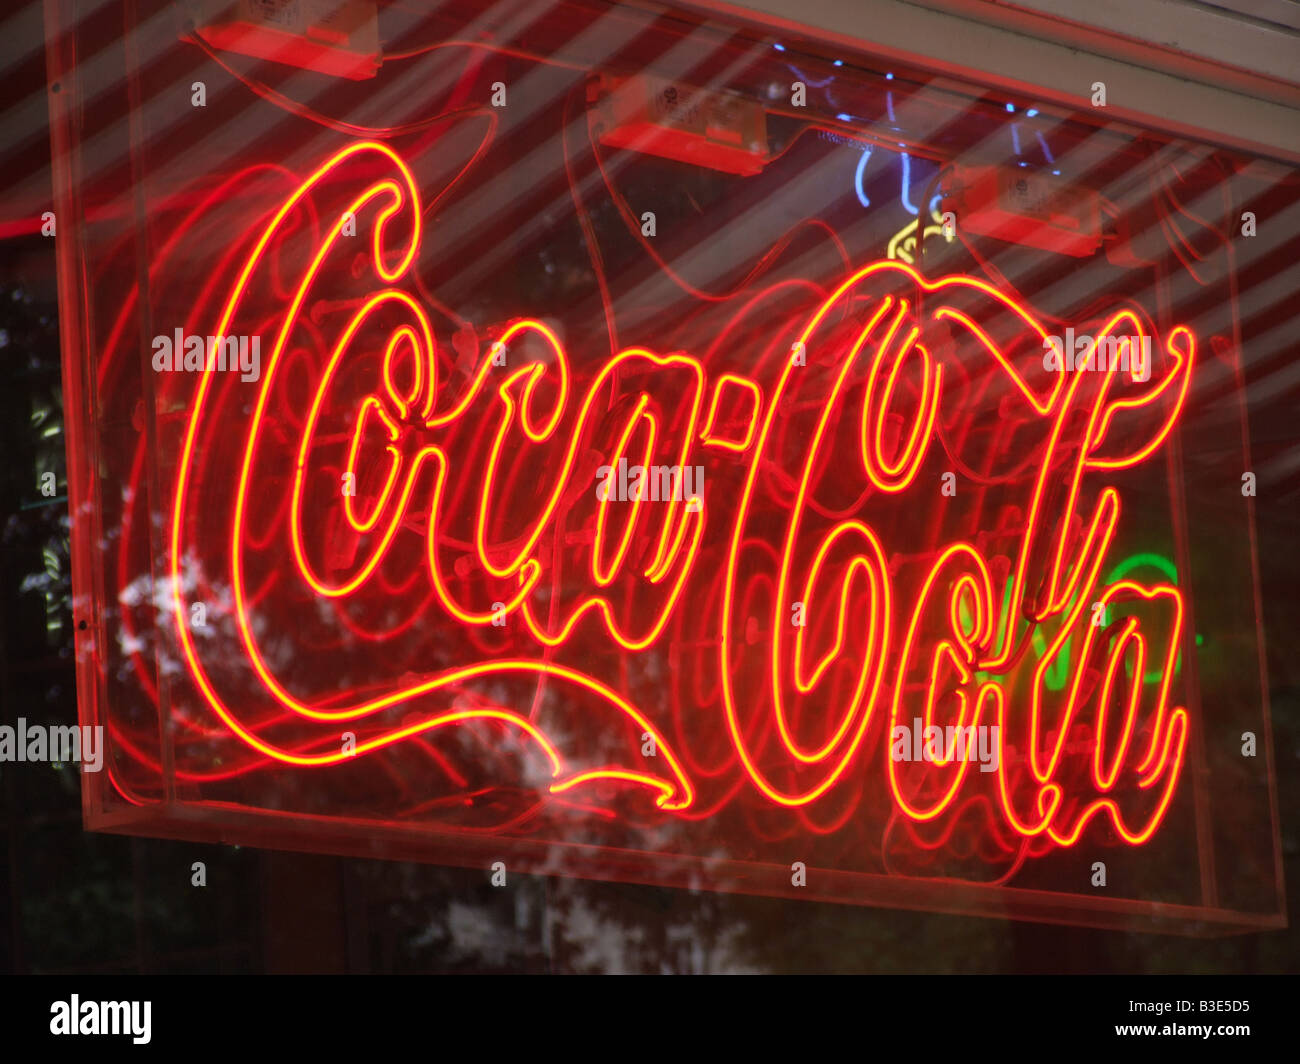 Illuminated Coca Cola Neon Sign In Shop Window Stock Photo - Alamy